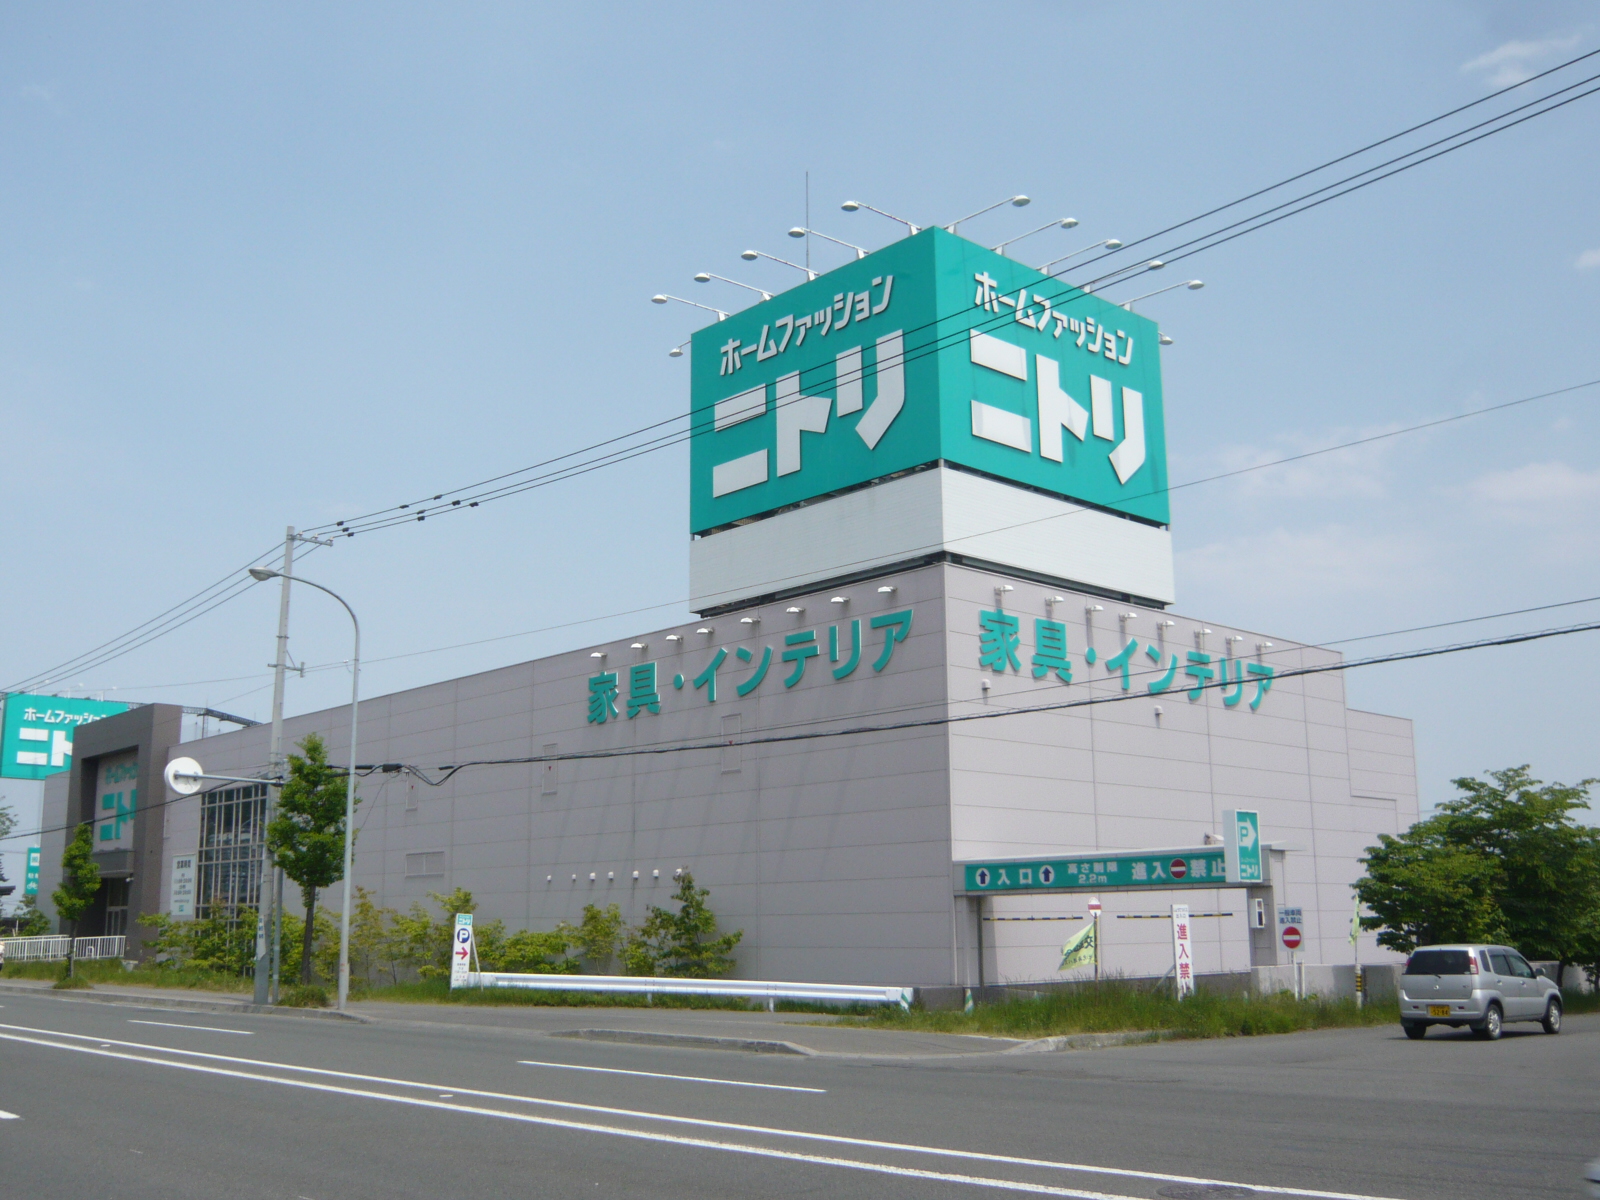 Home center. 1900m to Nitori Kawazoe store (hardware store)